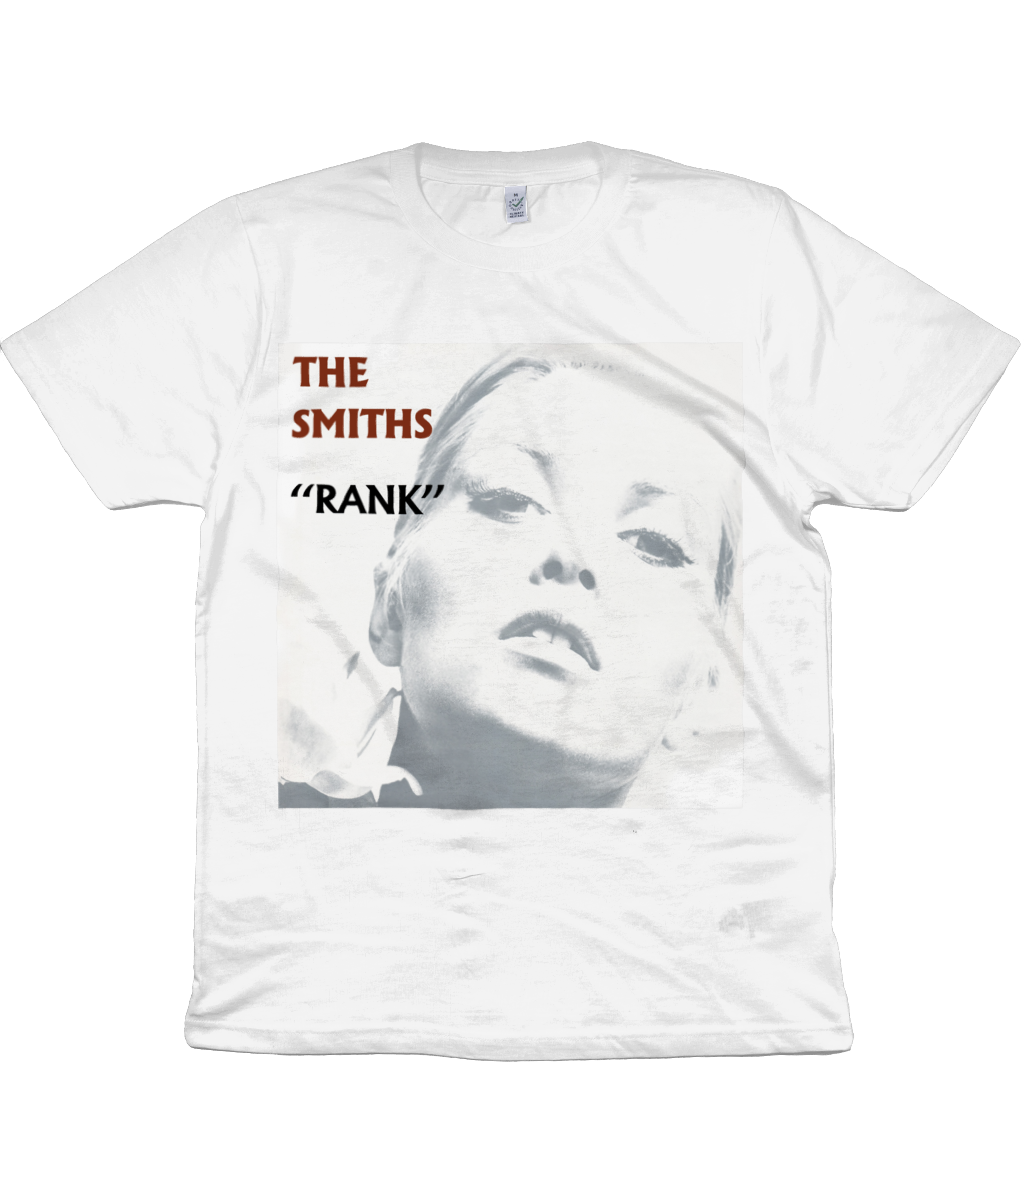 The Smiths - RANK - 1988